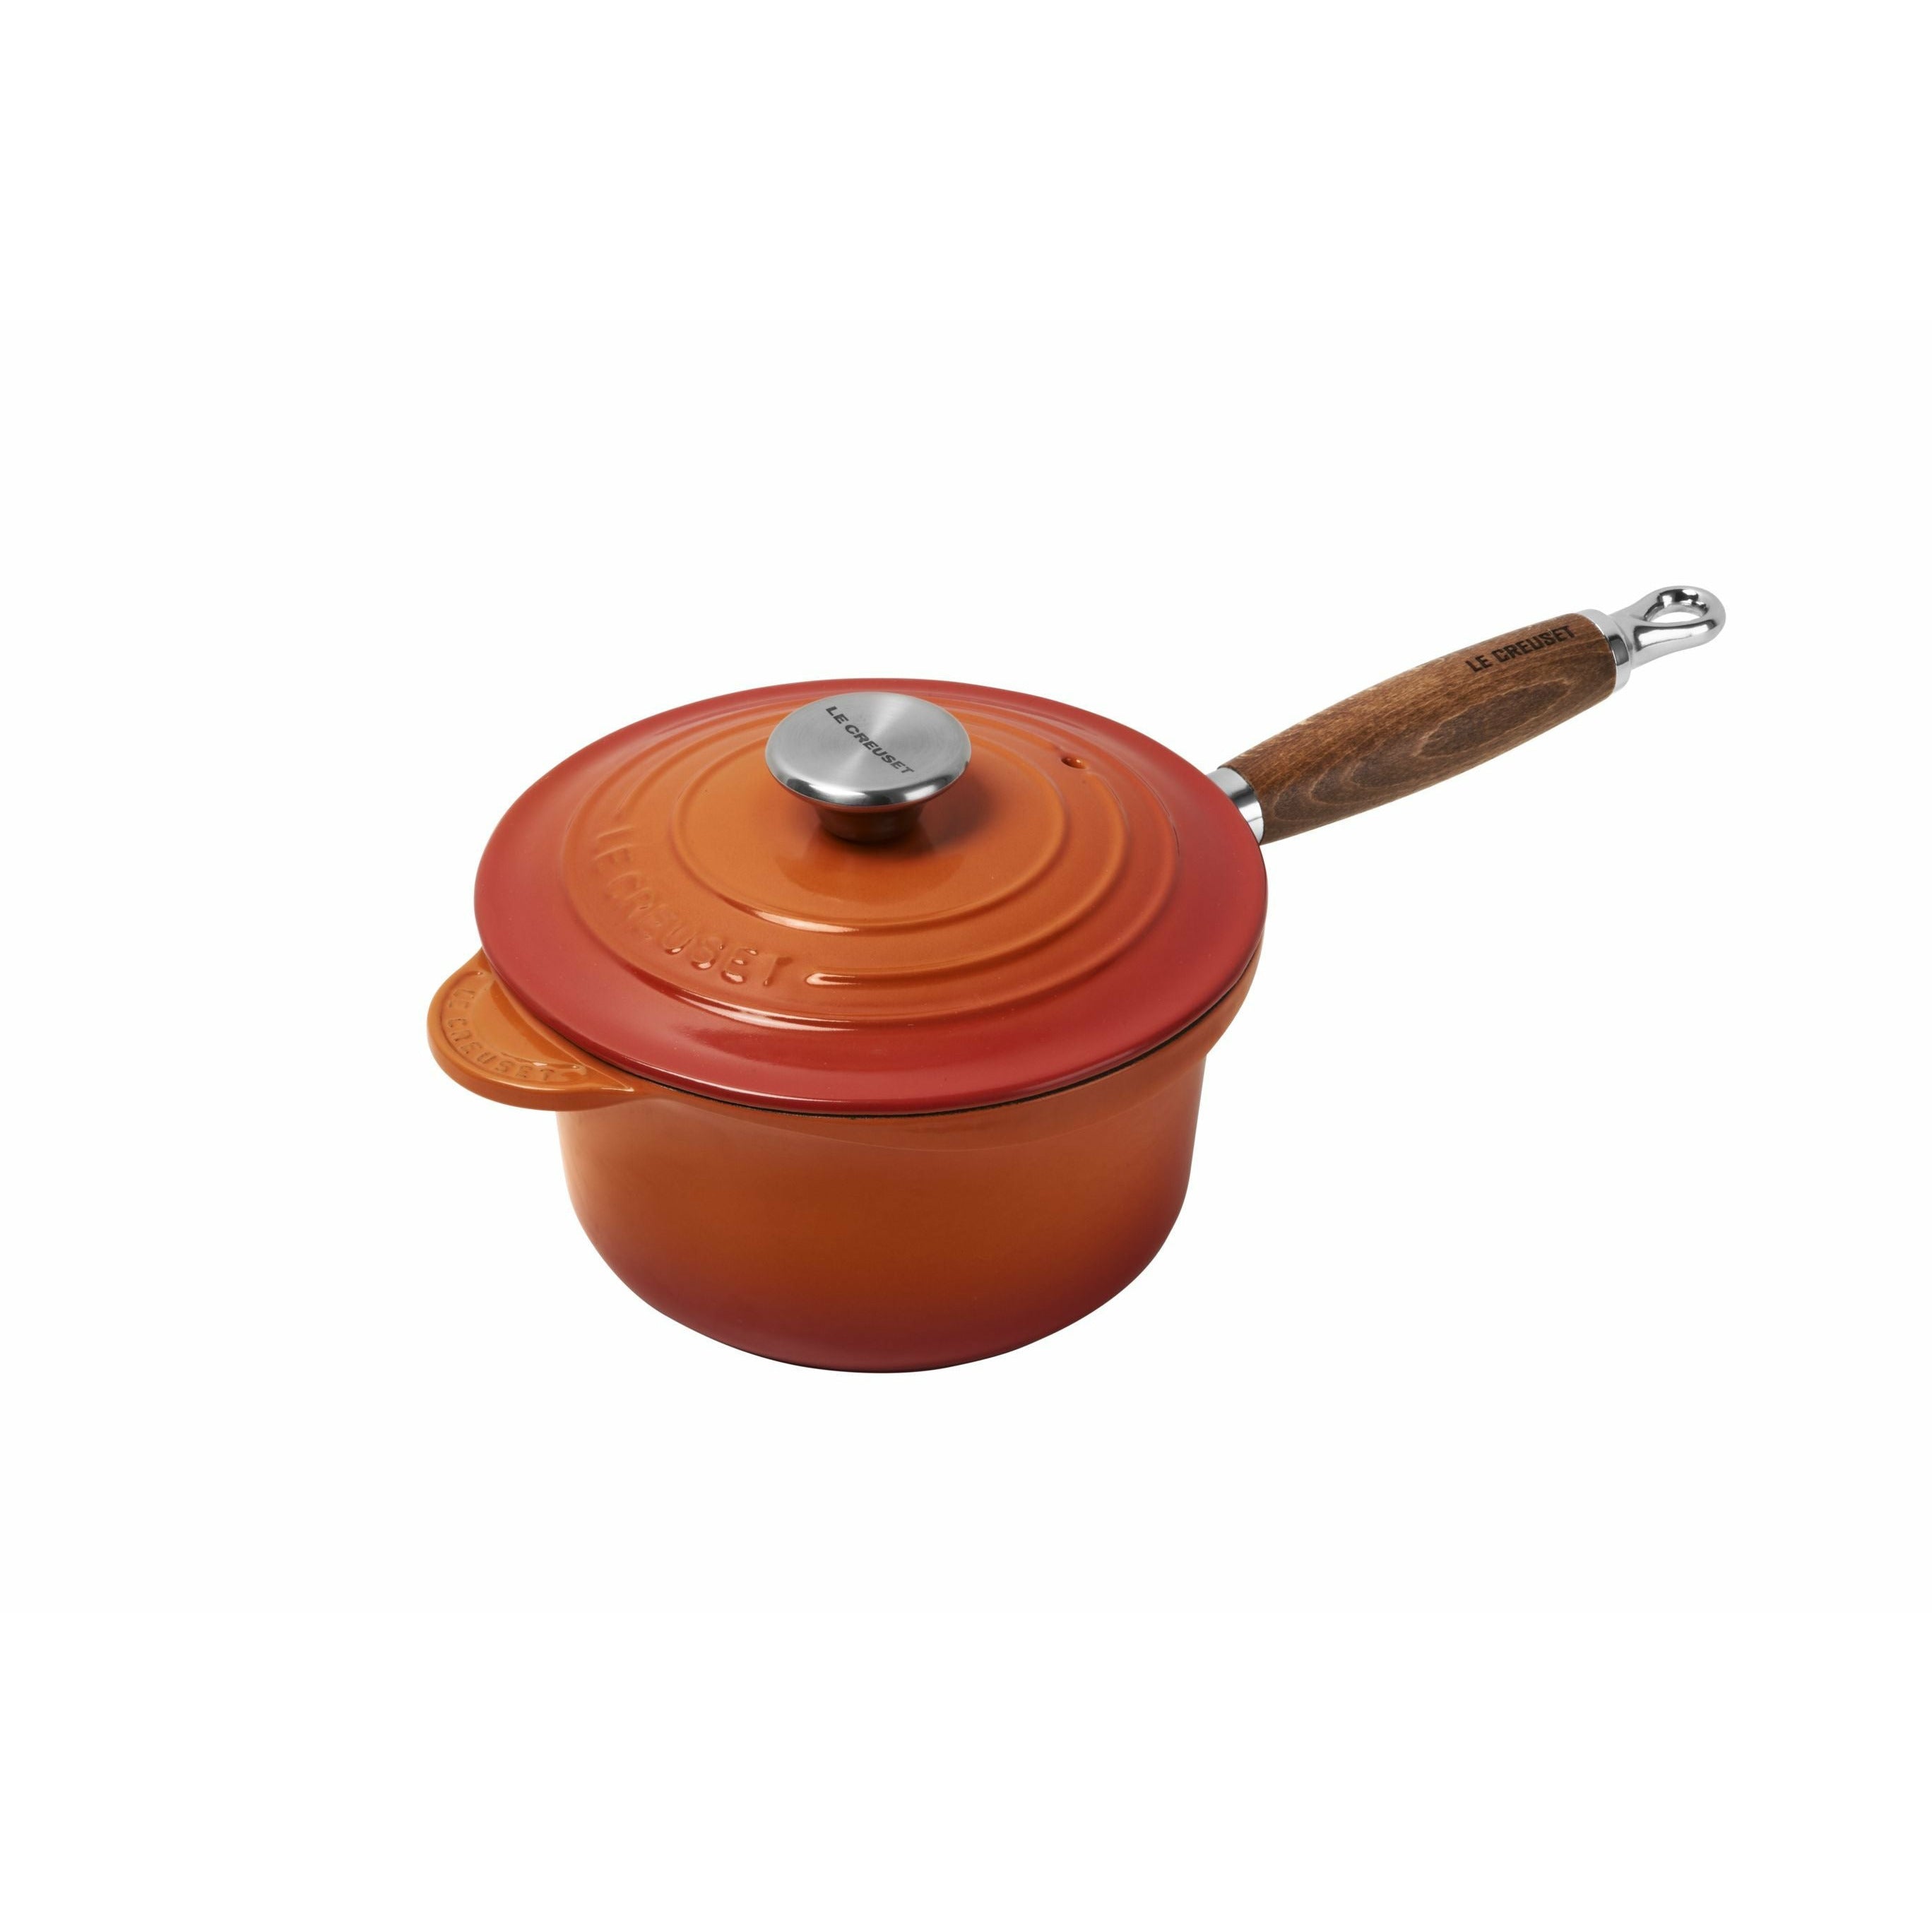 Le Creuset Traditionele professionele pot met houten handgreep 18 cm, oven rood